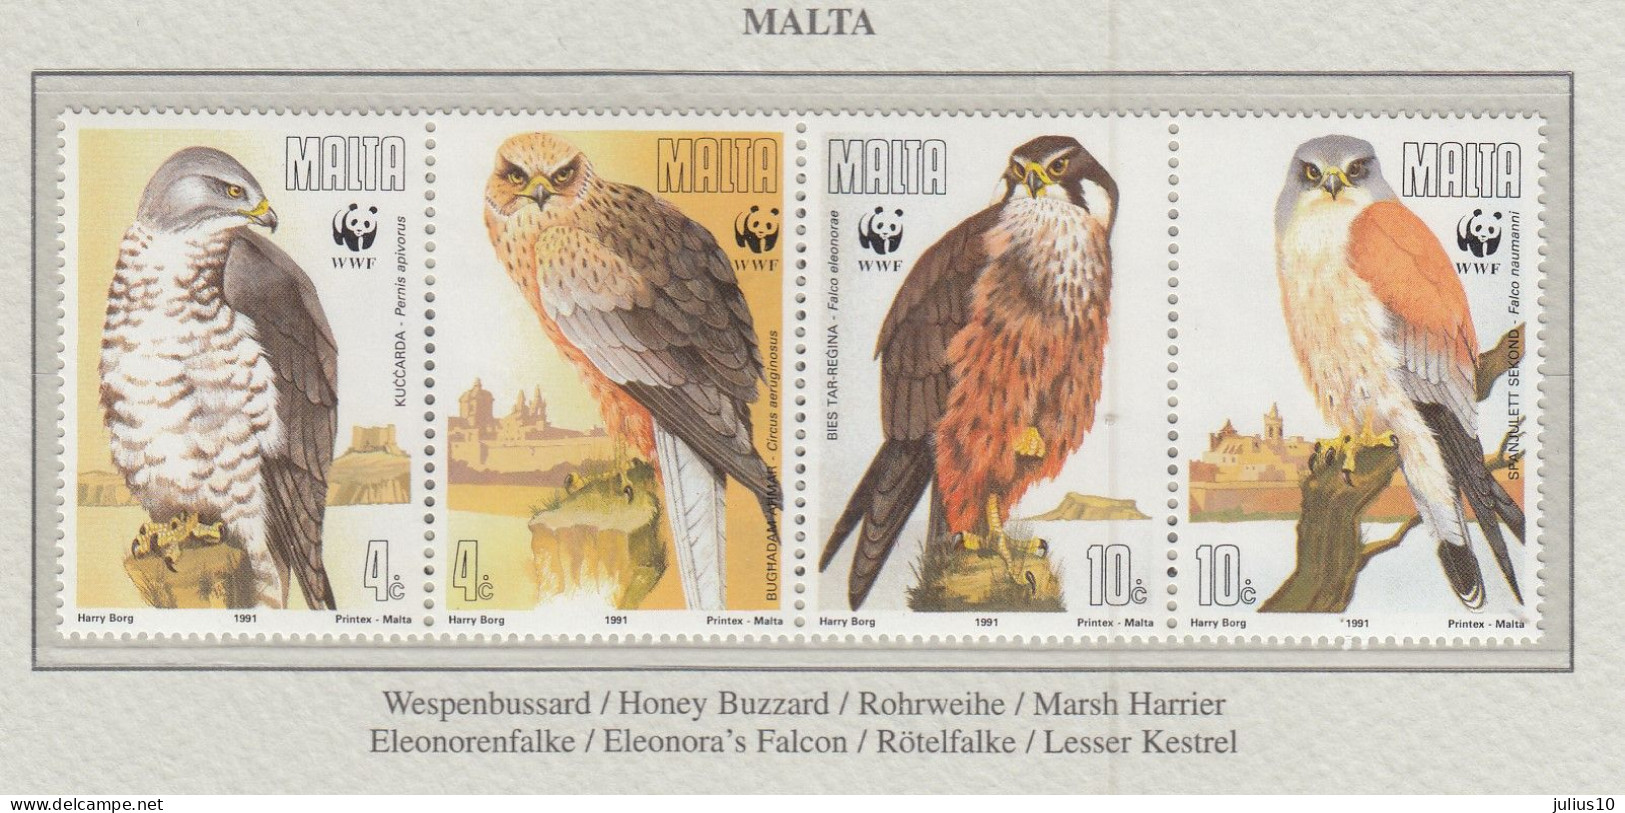 MALTA 1991 WWF Birds Mi 864-867 MNH(**) Fauna 798 - Eagles & Birds Of Prey